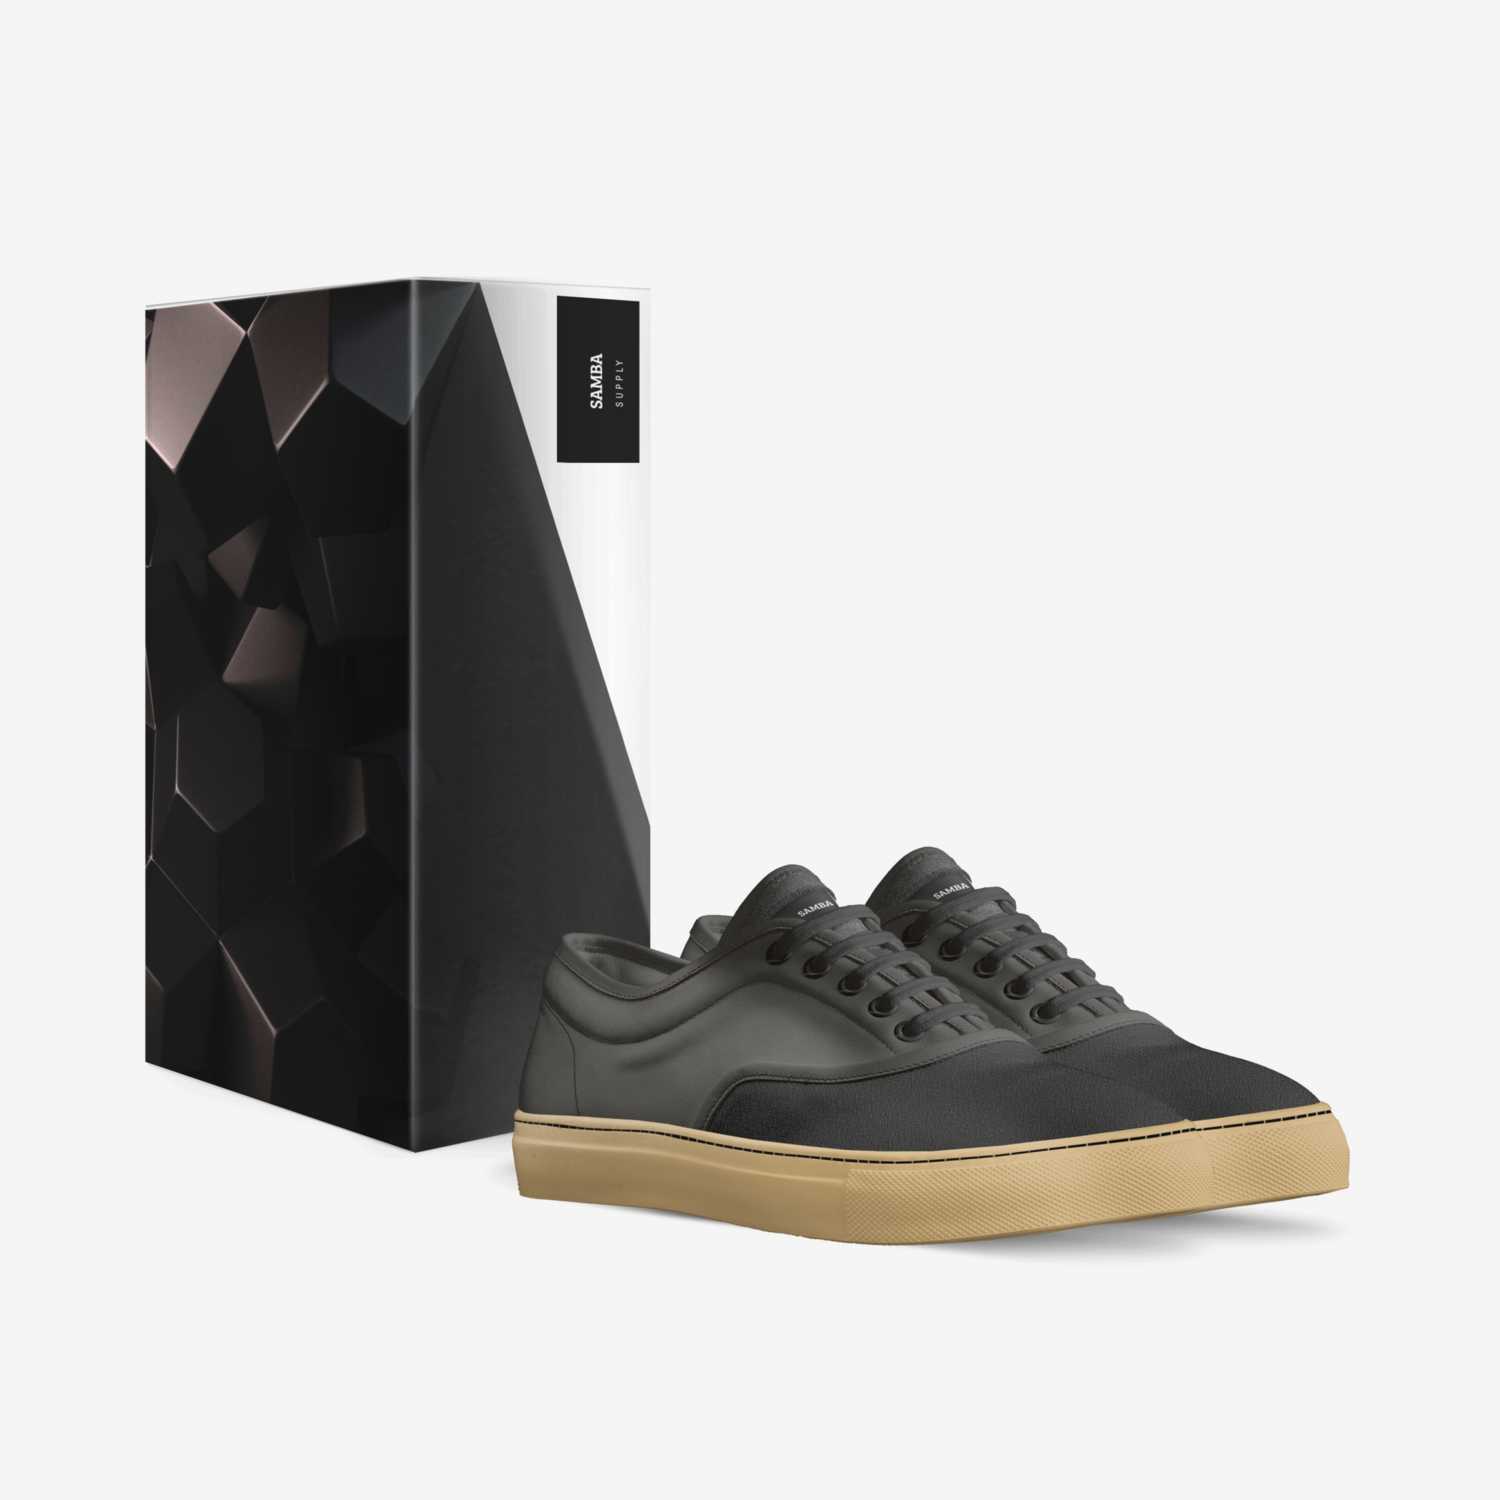 SAMBA custom made in Italy shoes by Jack Woollams | Box view